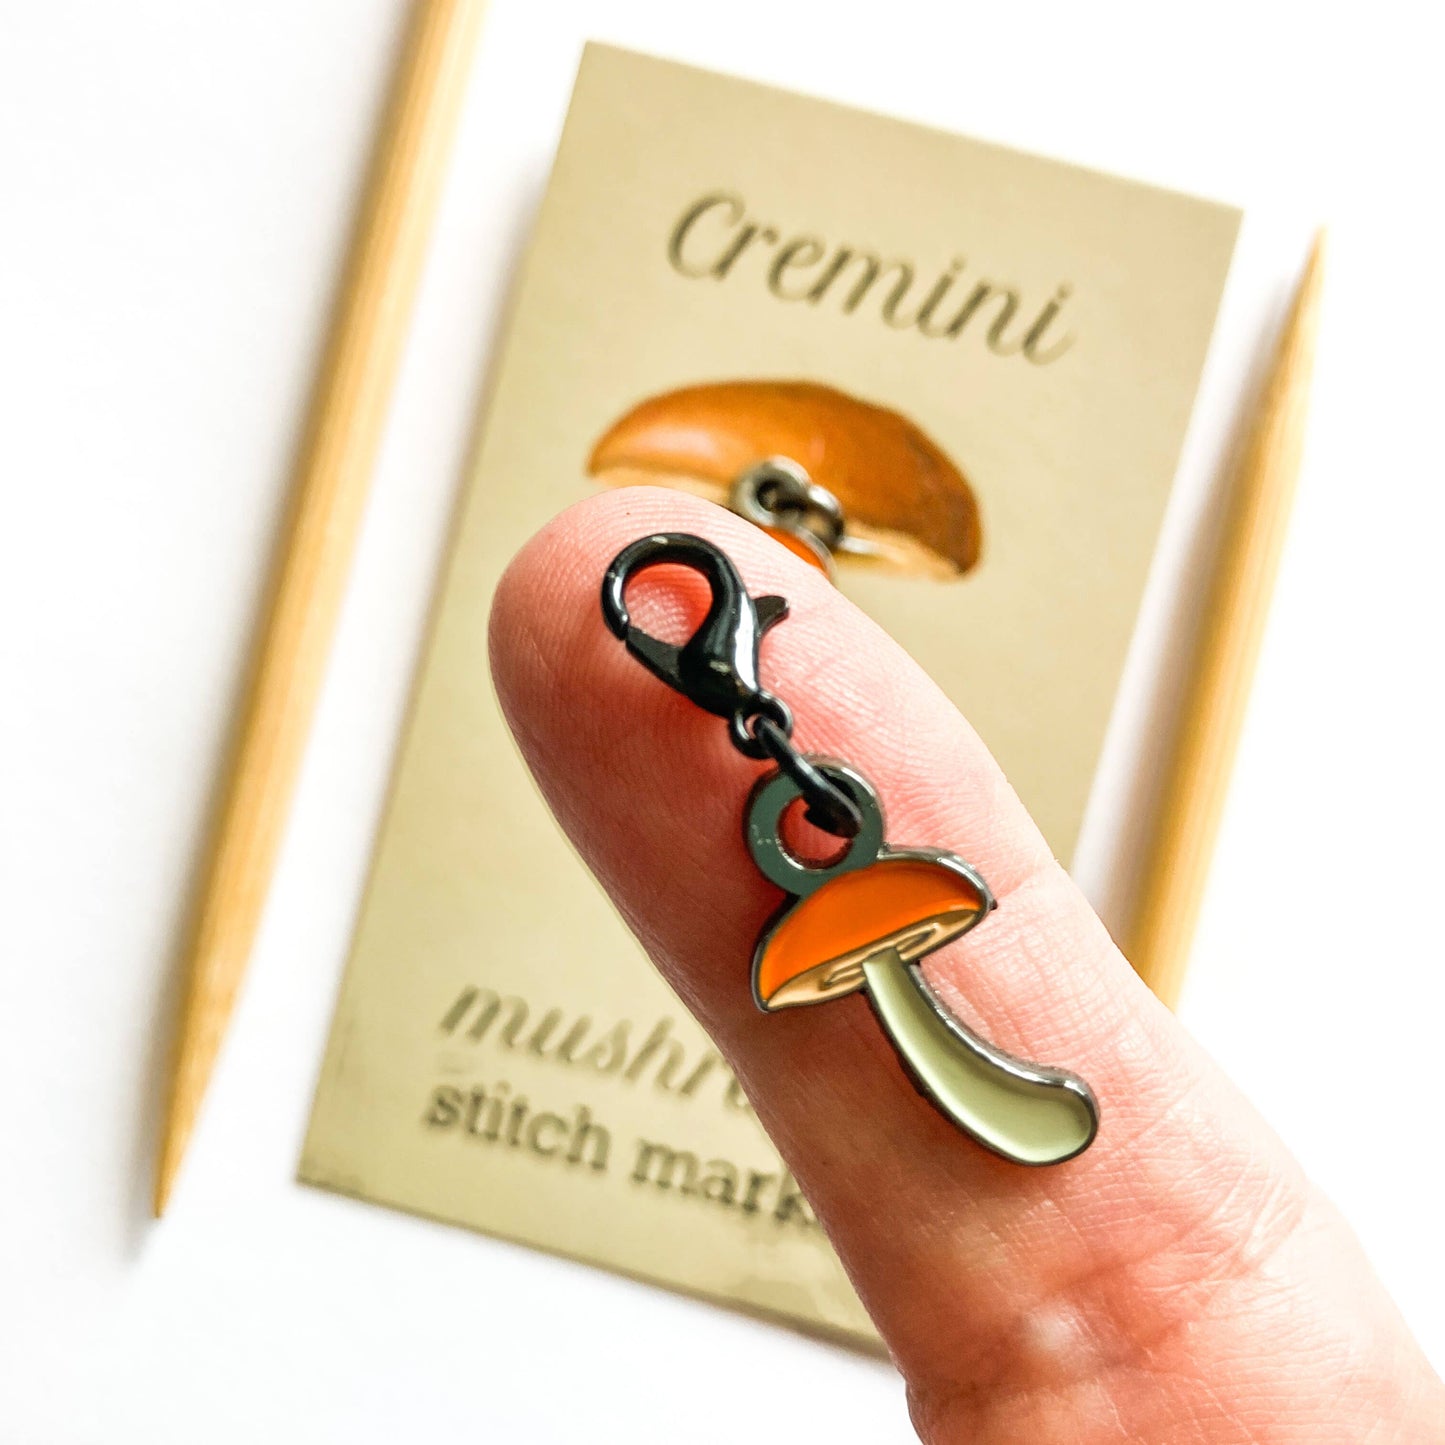 Mushroom Stitch Marker – More Good